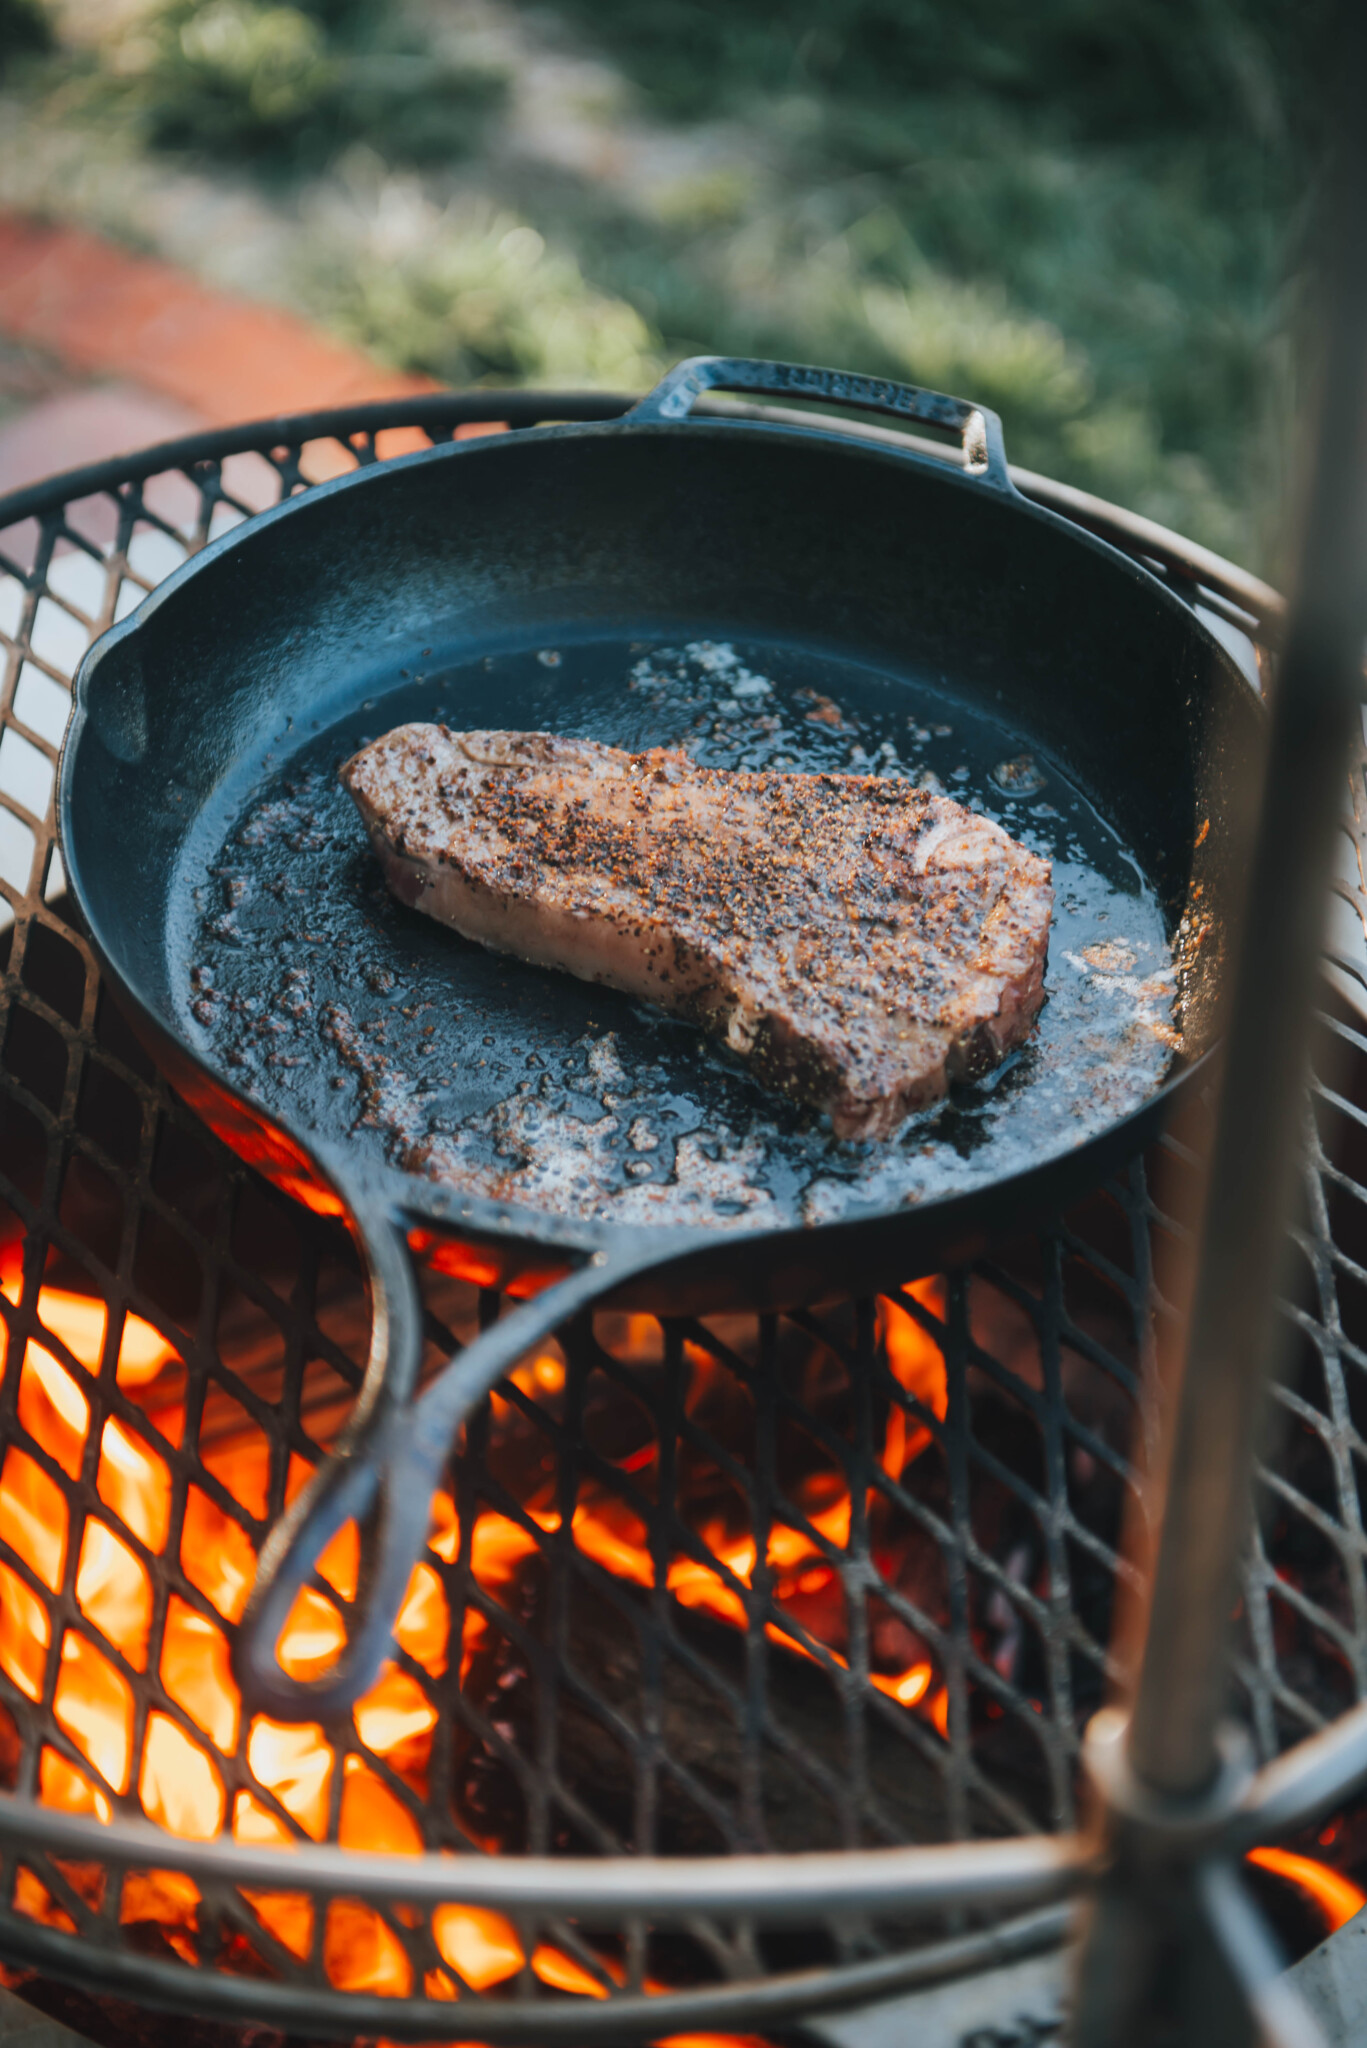 Strip steak in skillet over campfire. 